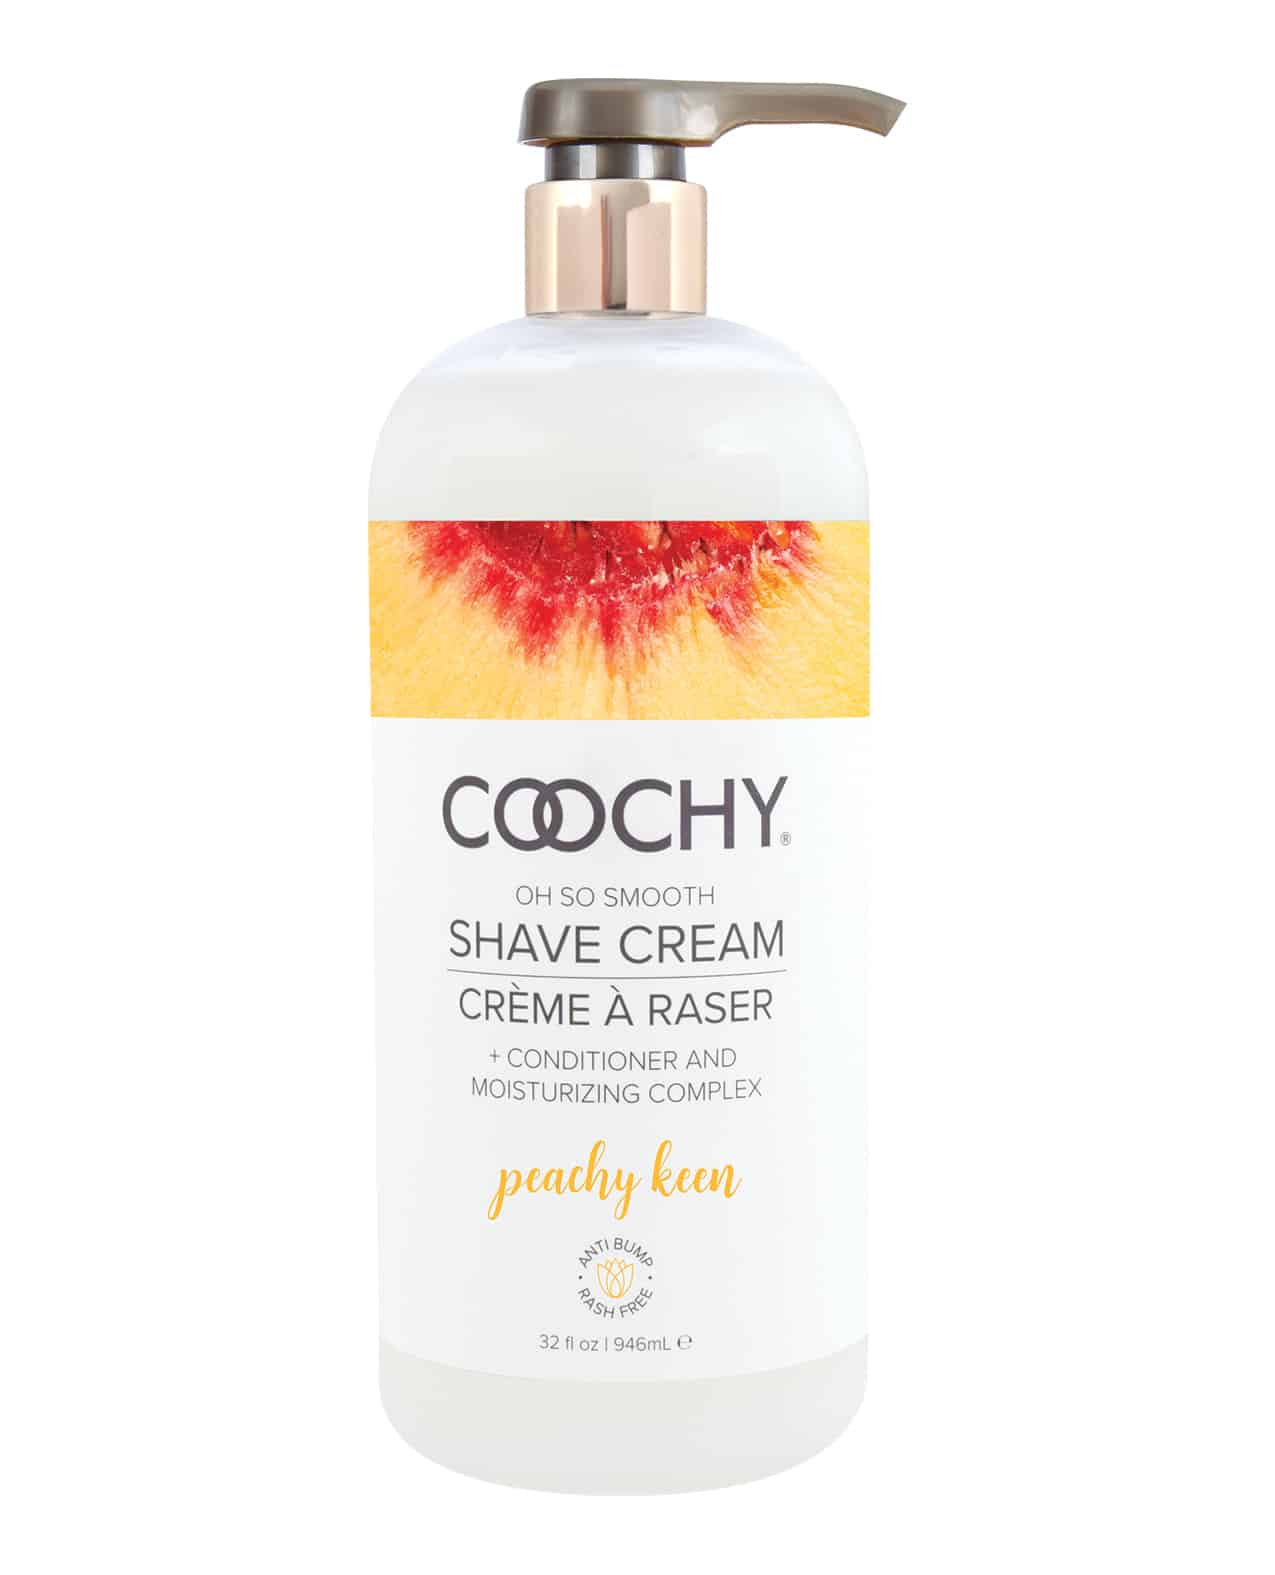 COOCHY Shave Cream 32 oz Peachy Keen